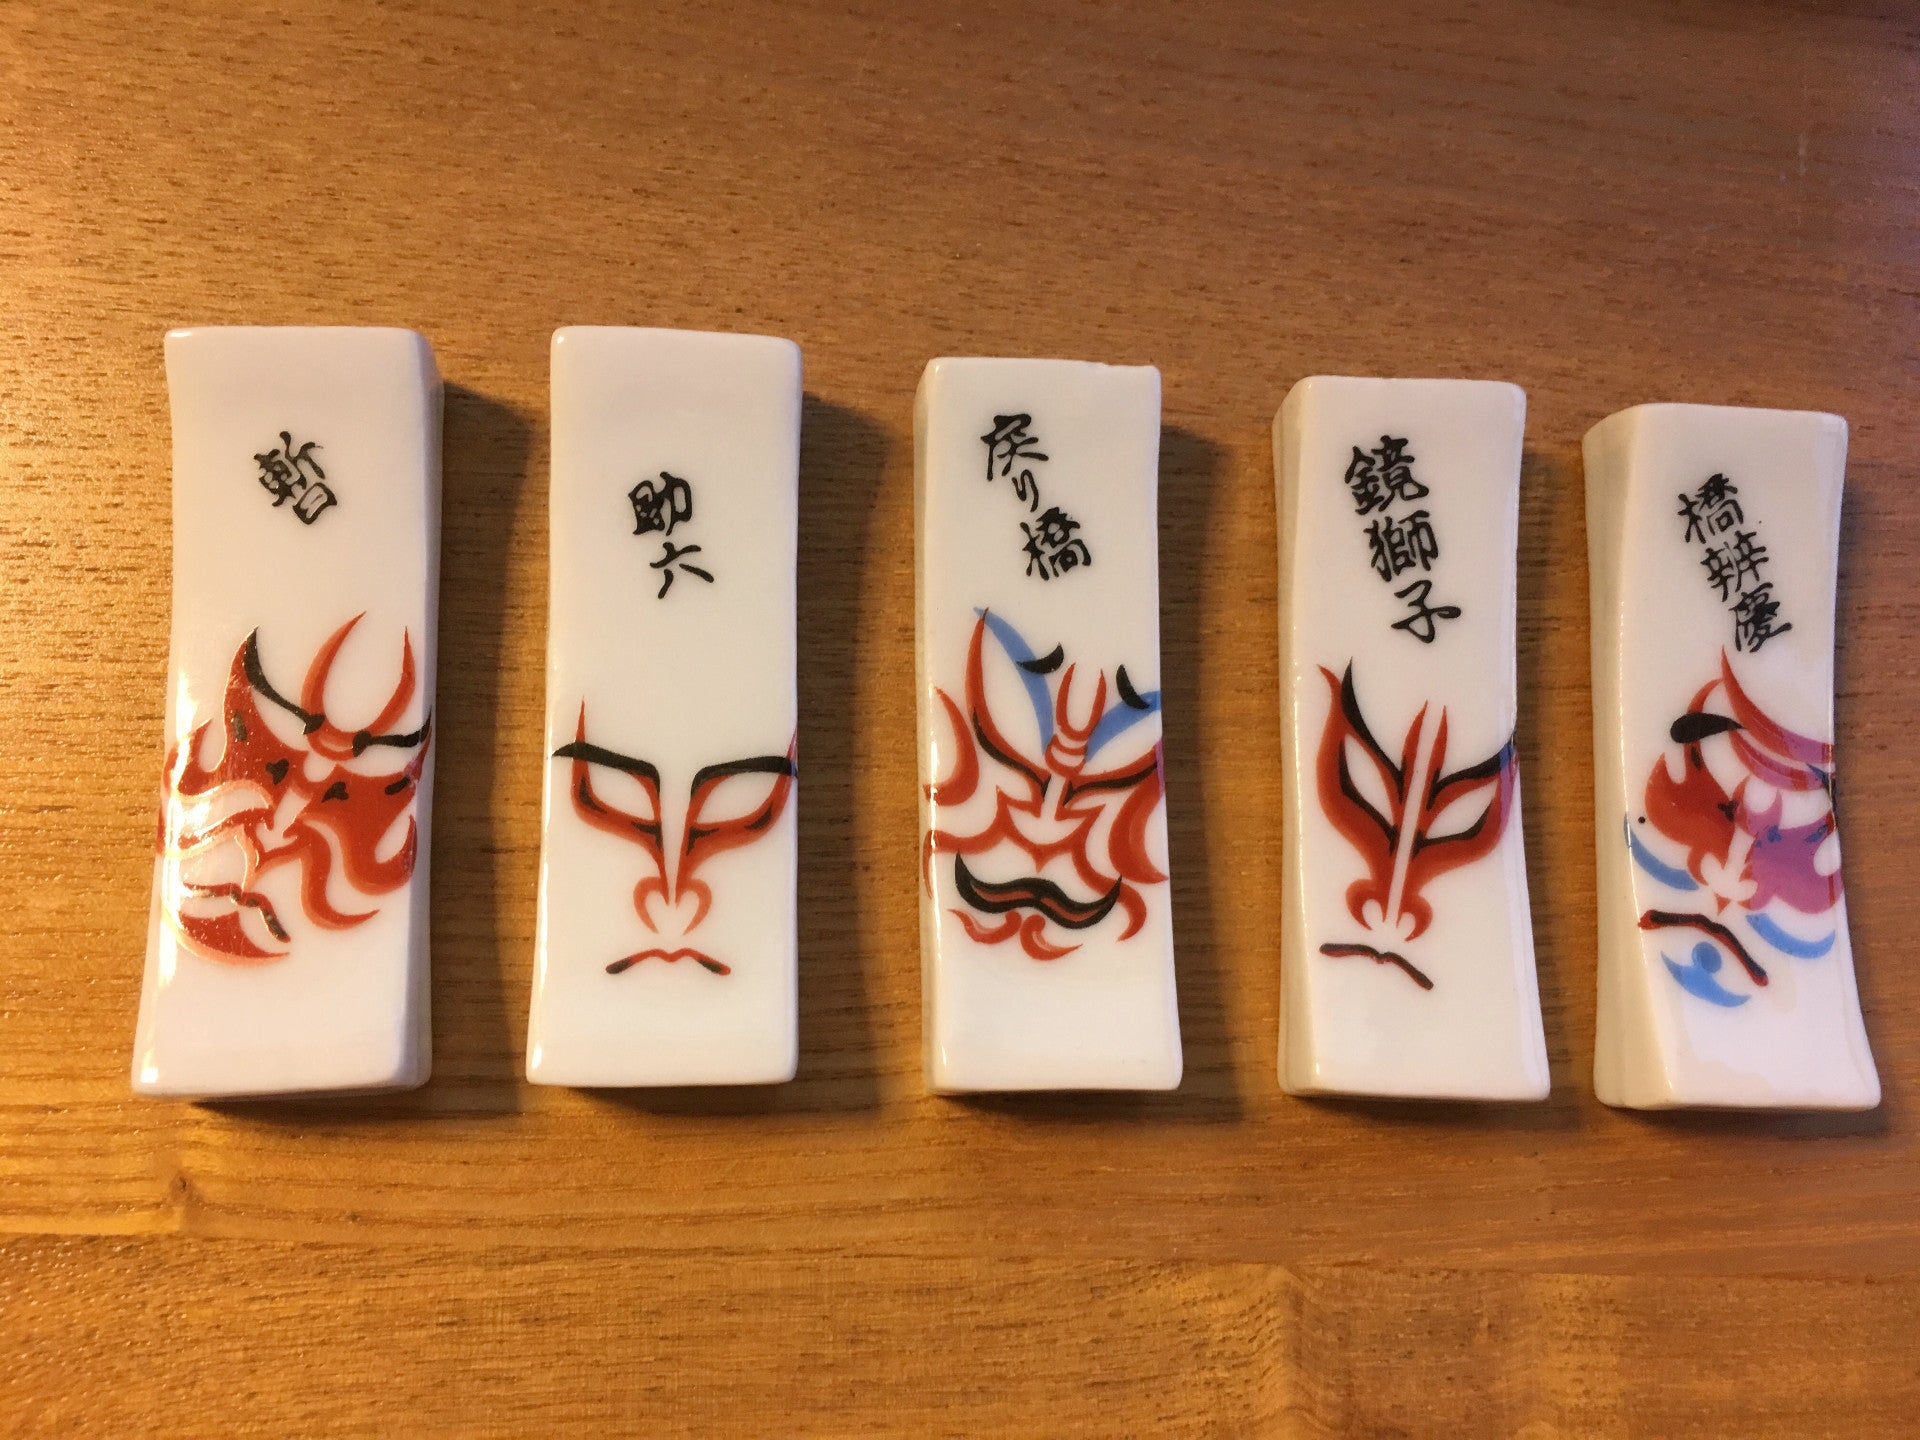 Set of chopsticks rest